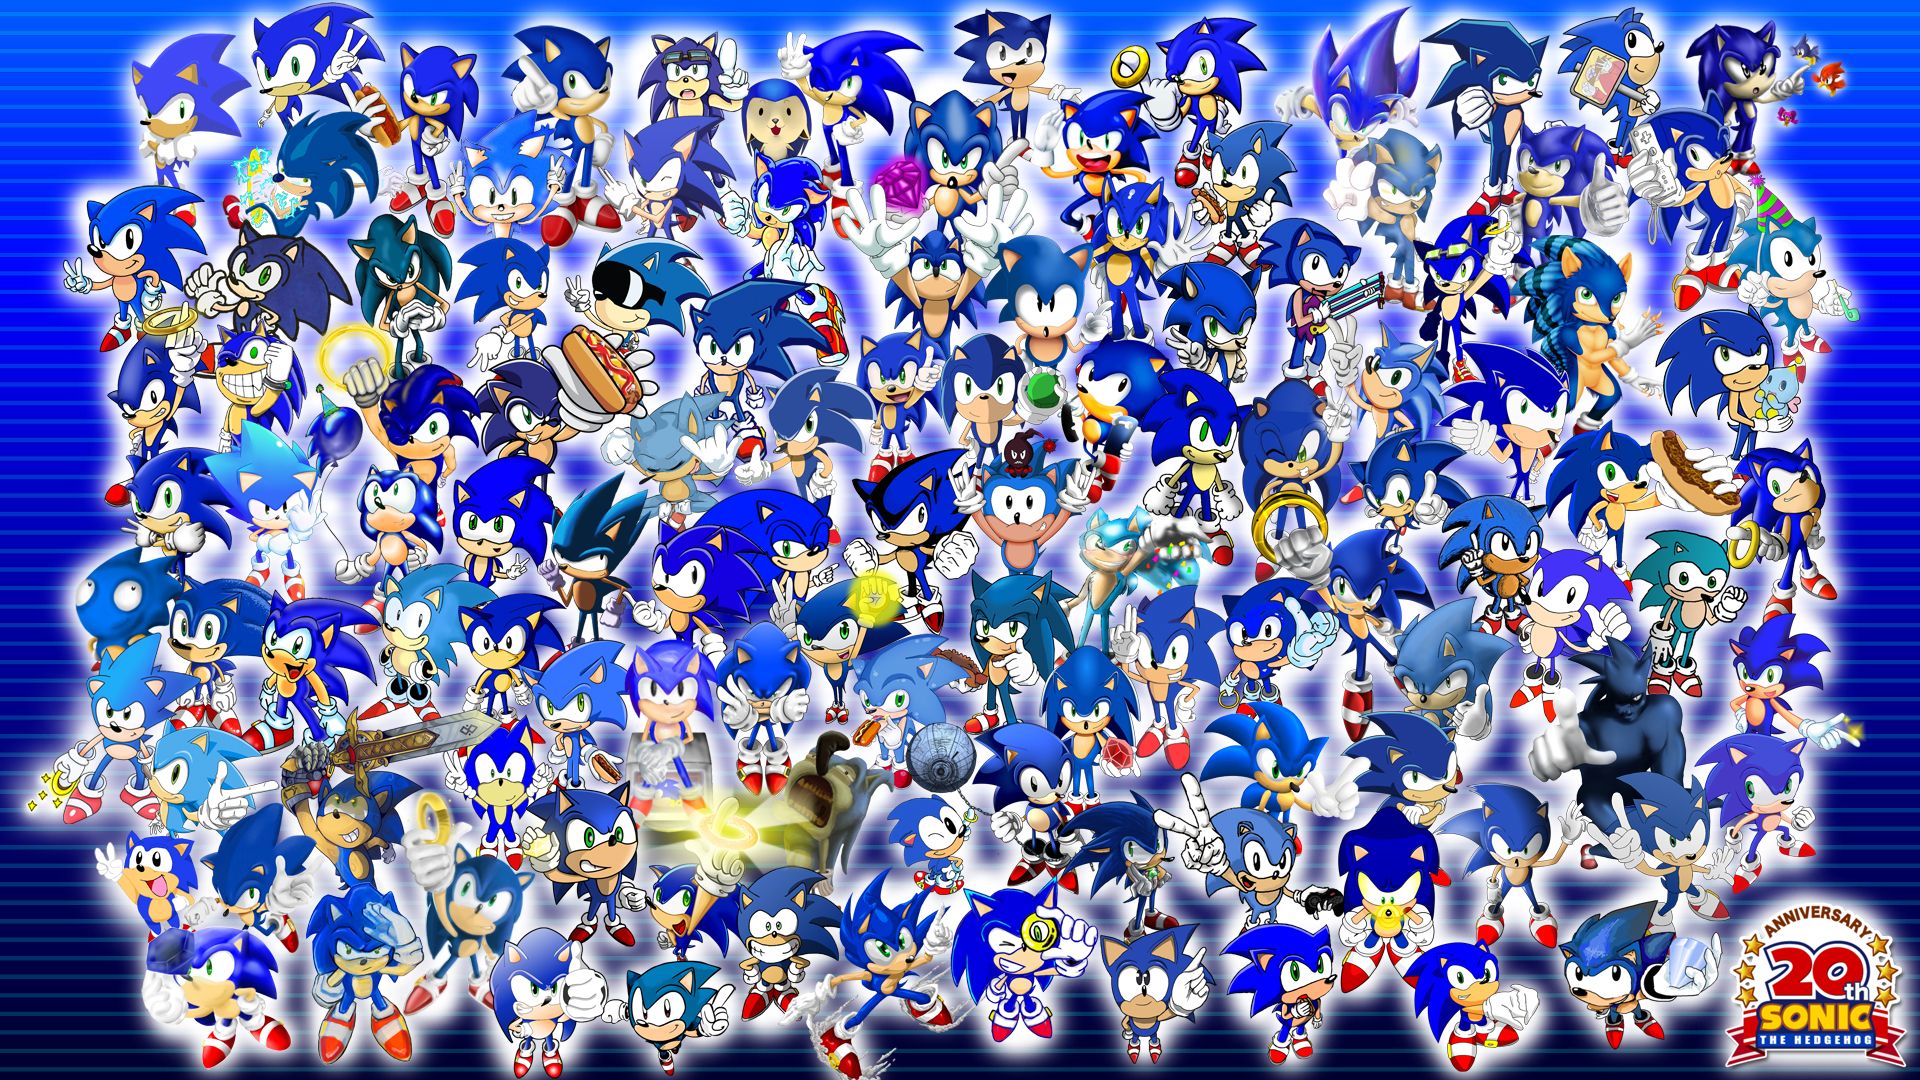 Sonic Generations Wallpaper. Sonic Generations Wallpaper, City Escape Sonic Generations Wallpaper and Sonic Generations Wallpaper Loading